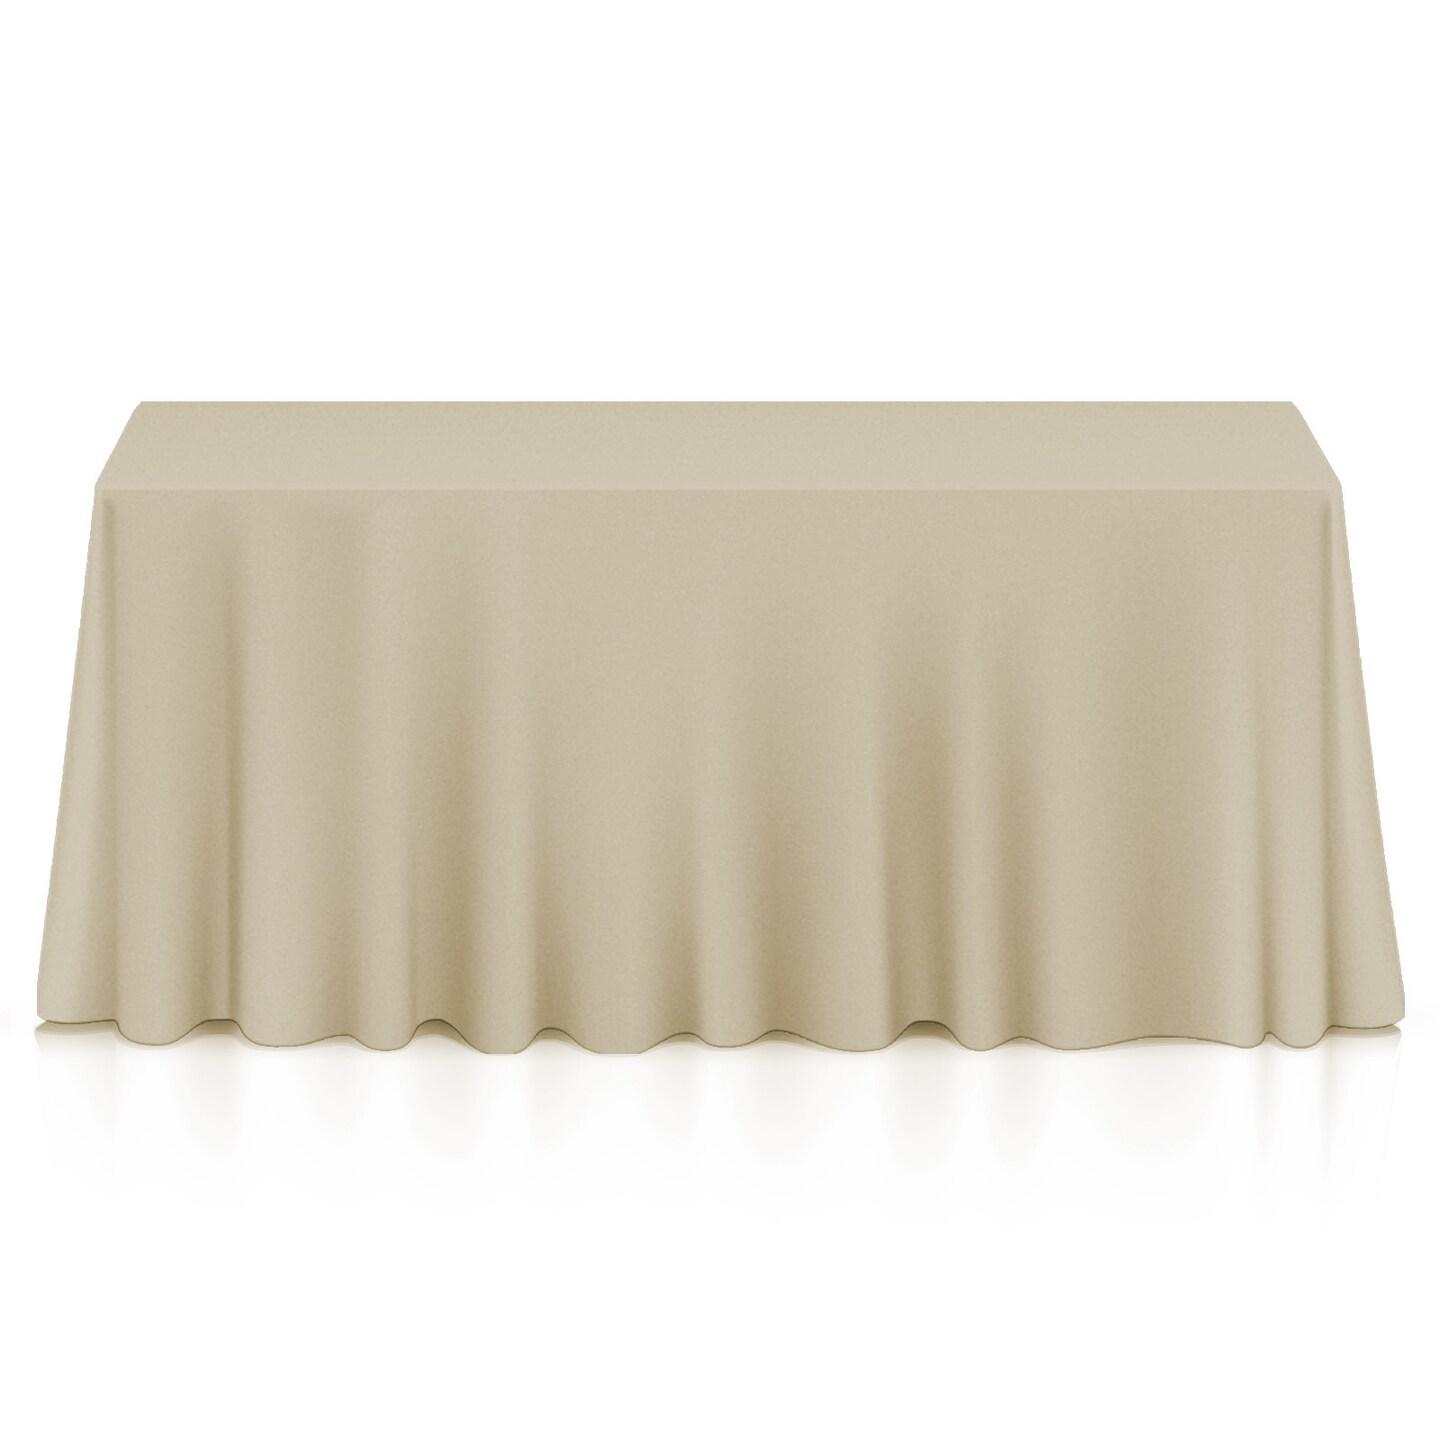 Lann's Linens - 10 Premium Tablecloths for Wedding / Banquet / Restaurant - Rectangular Polyester Fabric Table Cloths